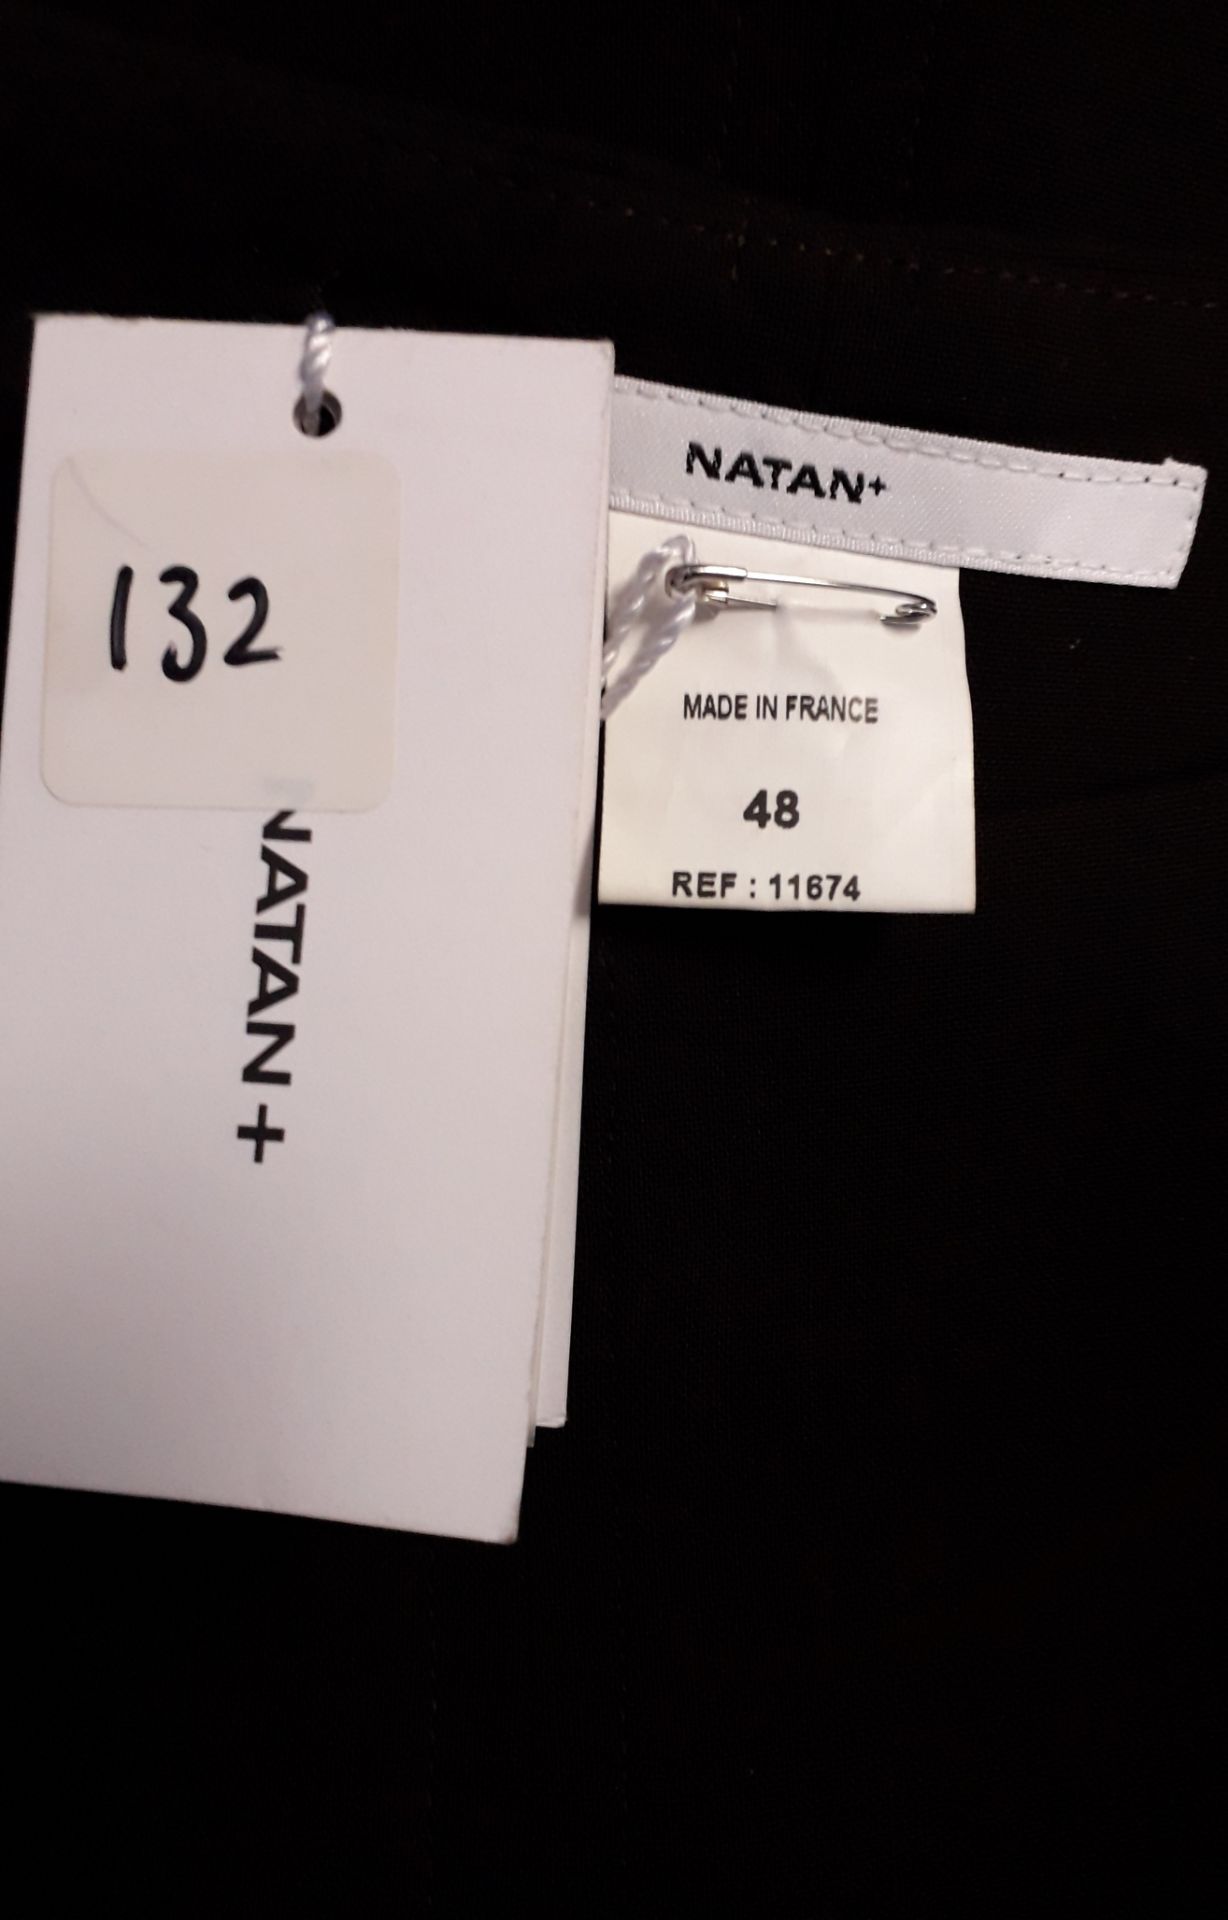 1 x Natan Plus Dark Brown Pencil Skirt - Size: 20 - Material: 99% Virgin Wool, 1% Nylon - From a - Image 2 of 5